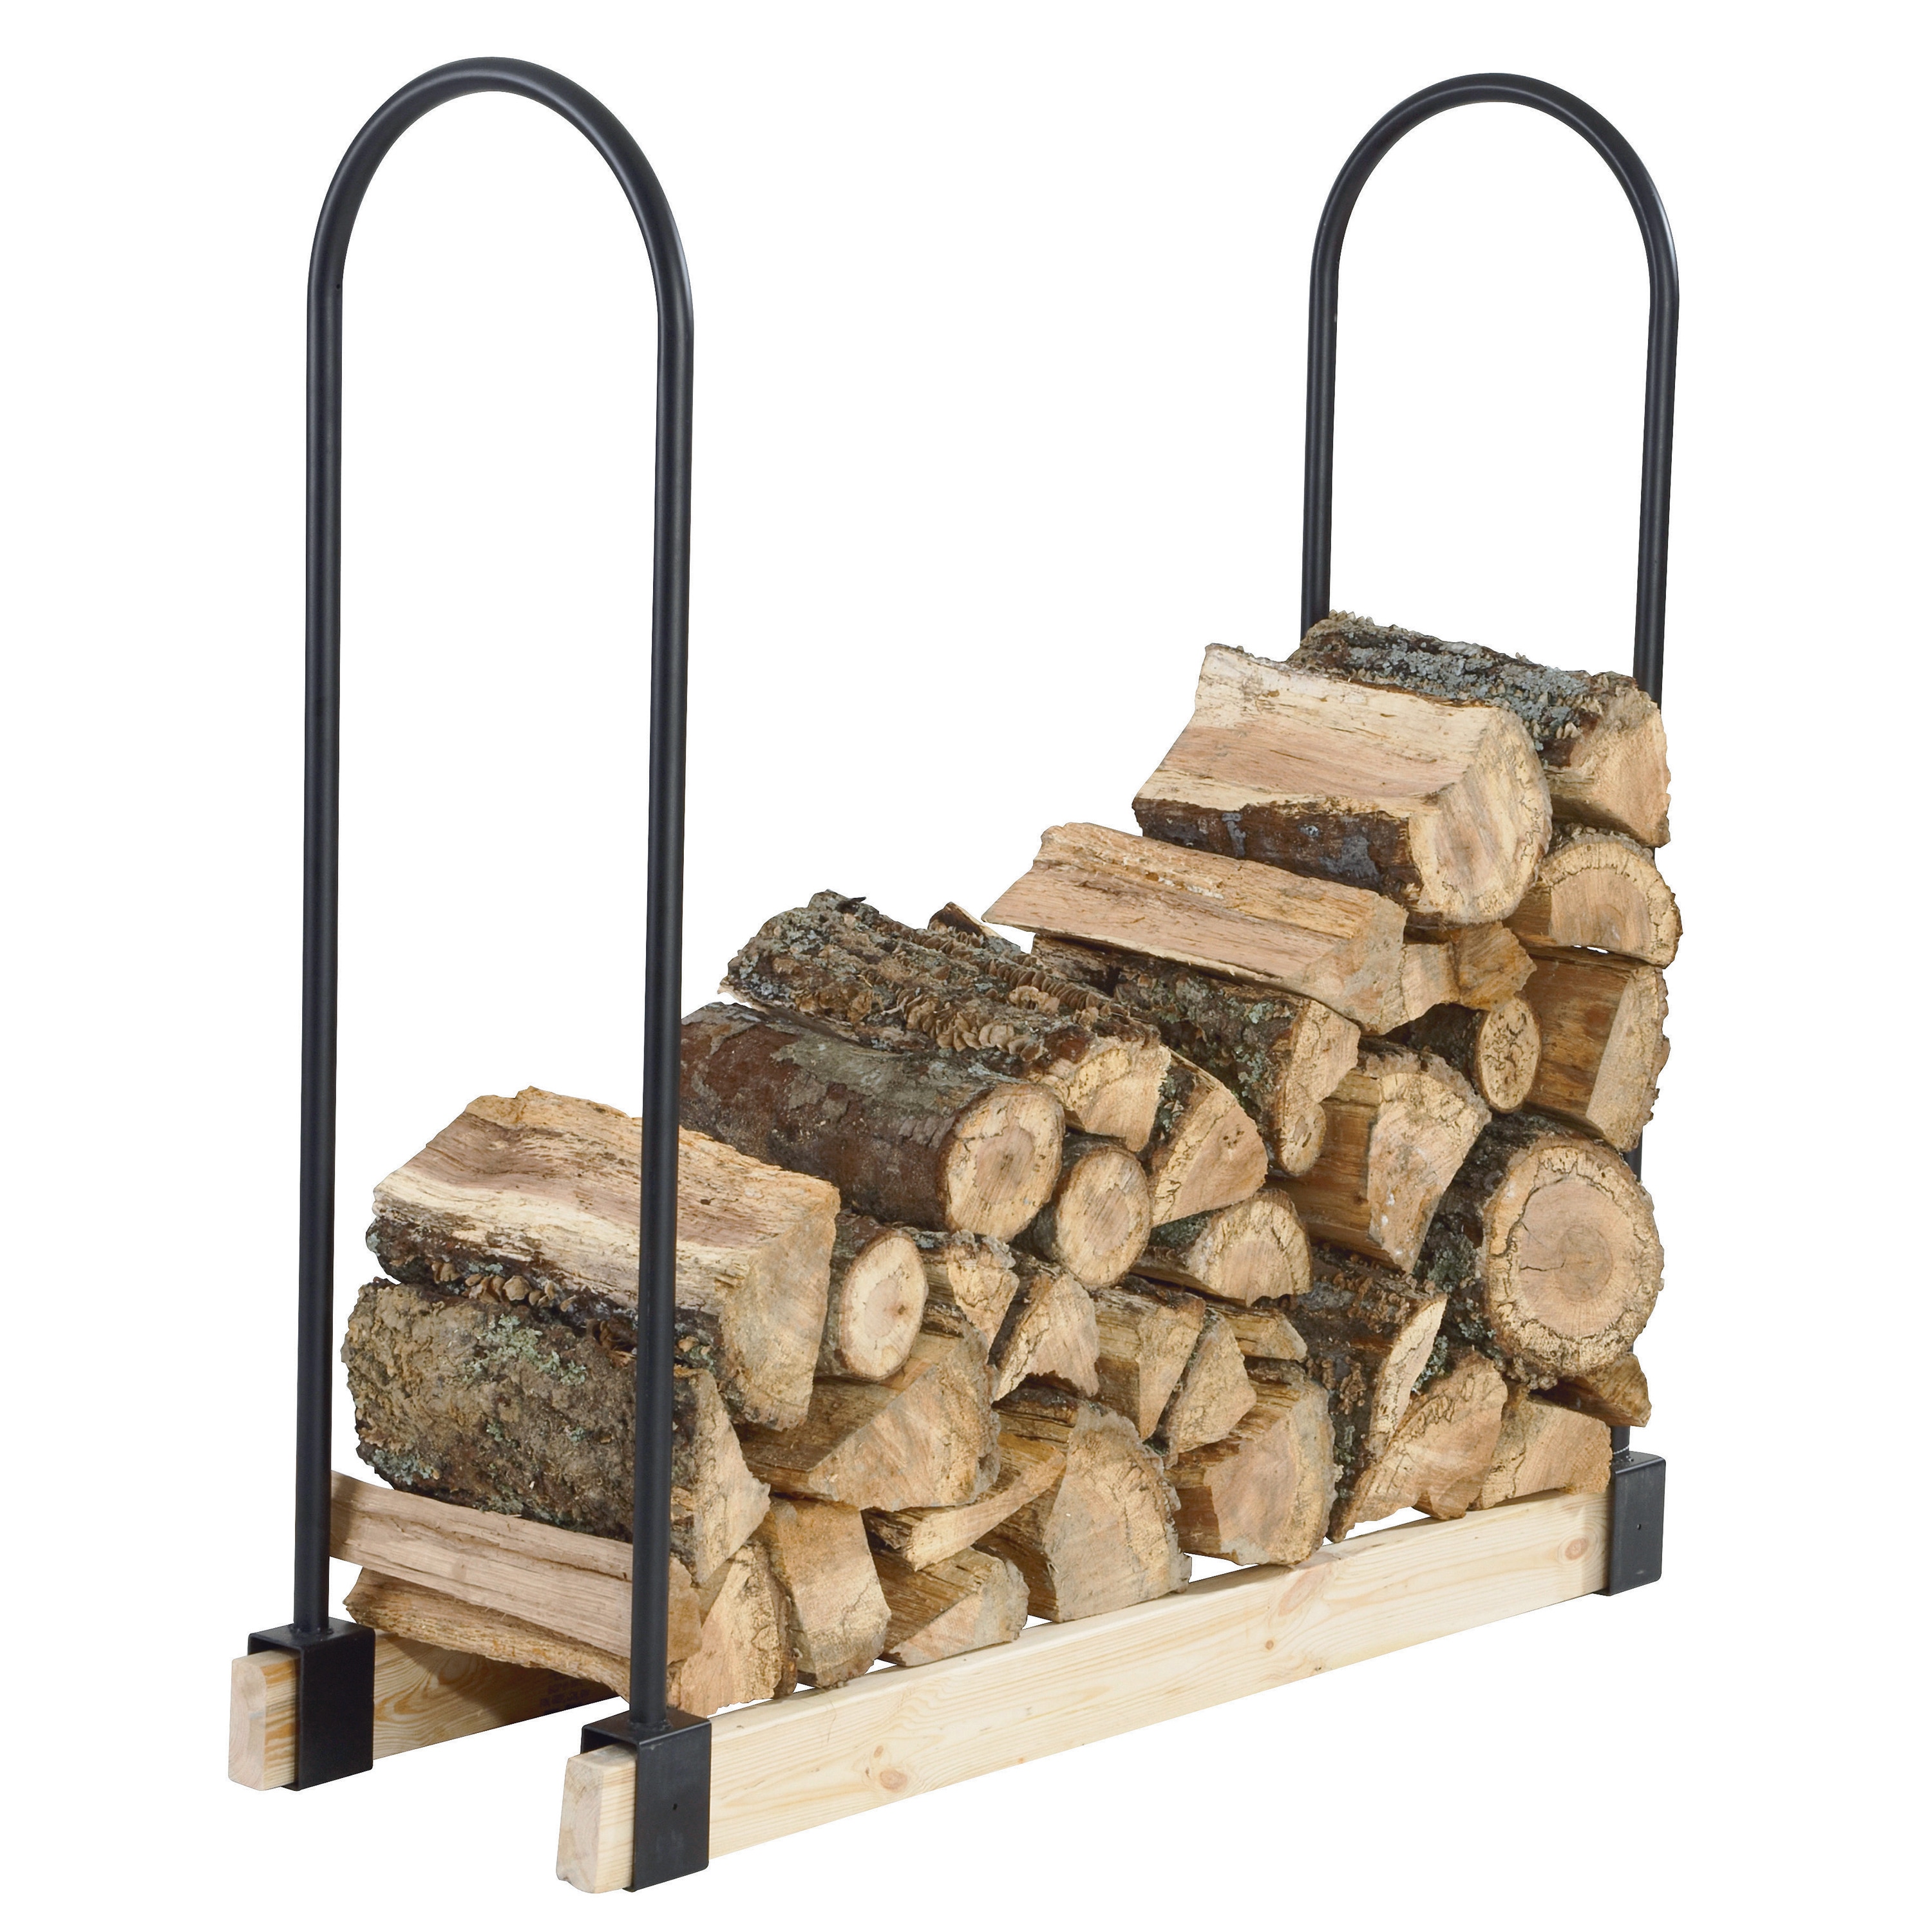 Outdoor Firewood Log Rack Bracket Kit Fireplace Wood Storage Holder